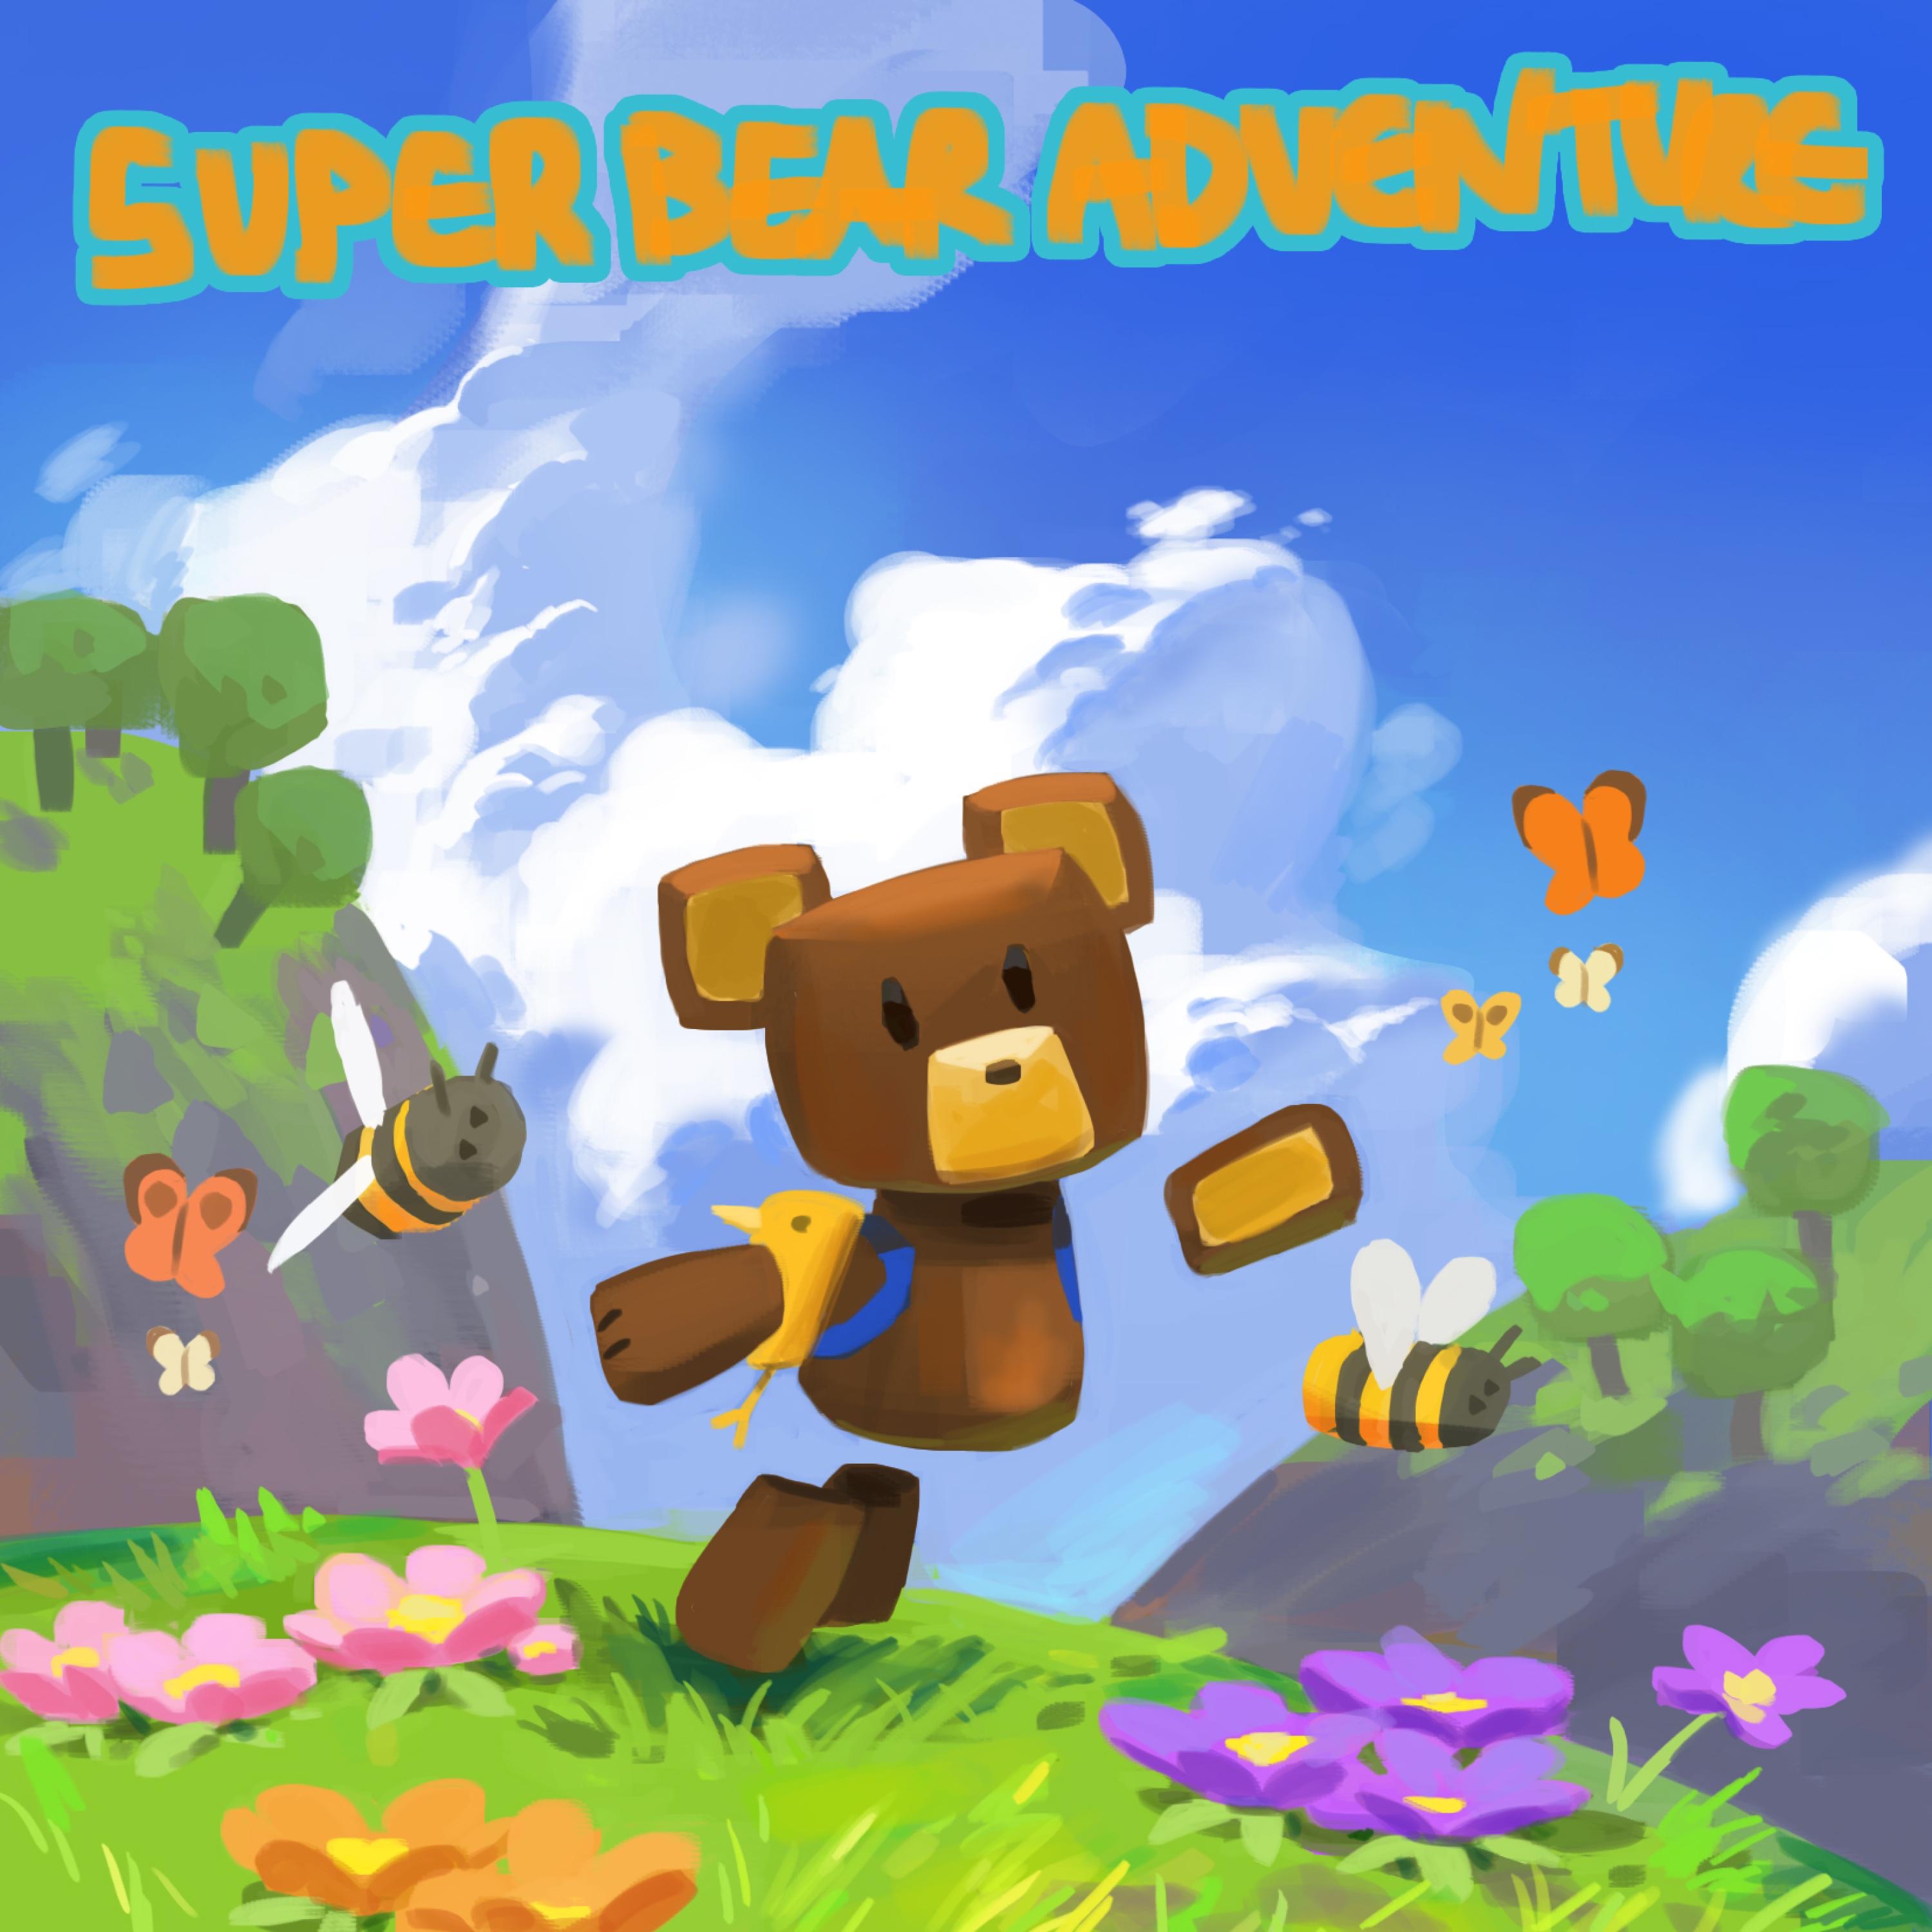 Super bear adventure 1.0. Bear Adventure игра. Супер Беар адвенчер. Приключения супер мишки. Супер беатвинчер.